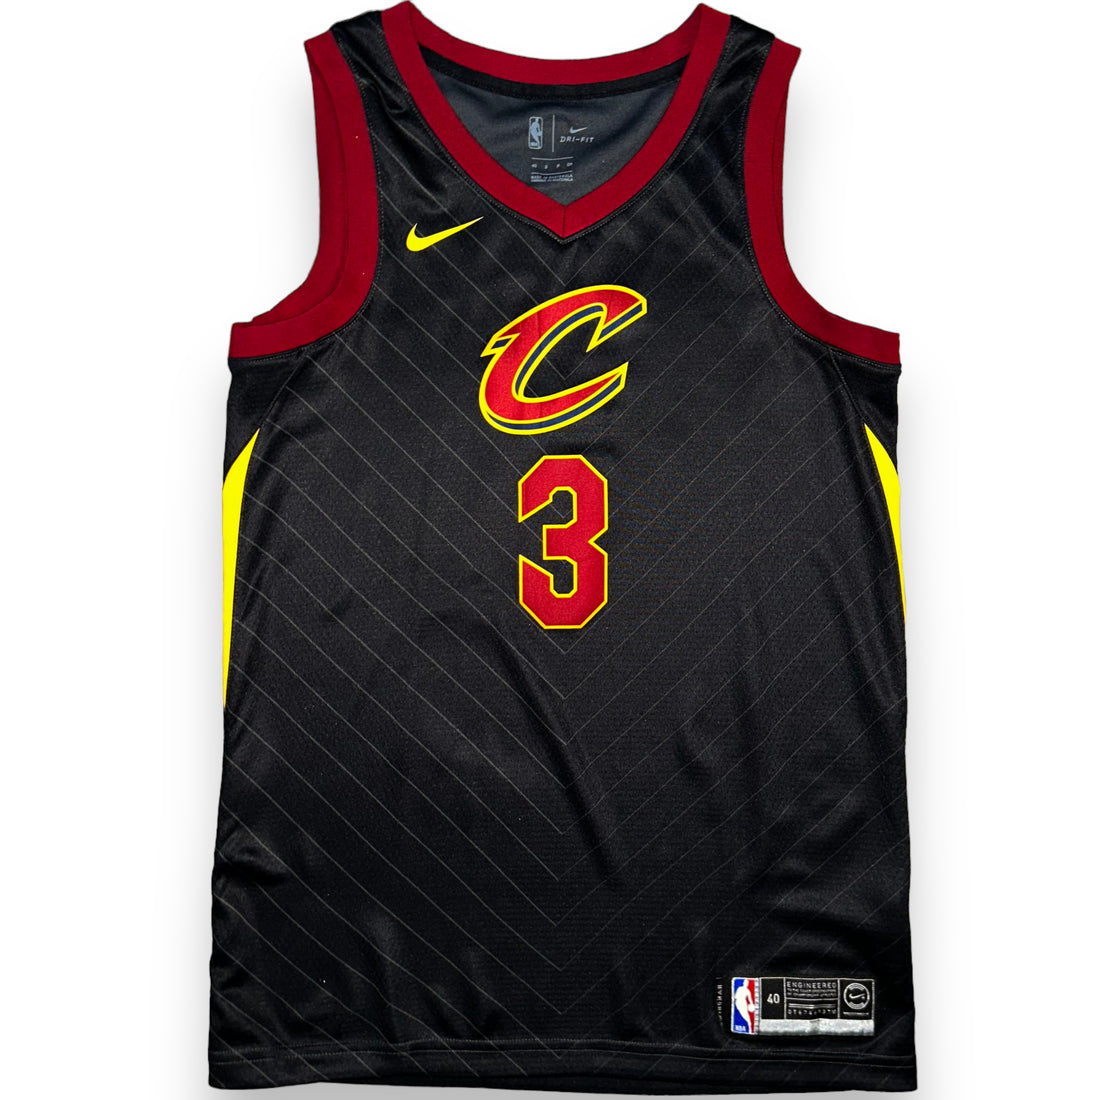 Canotta NBA Nike Cleveland Cavaliers (M)